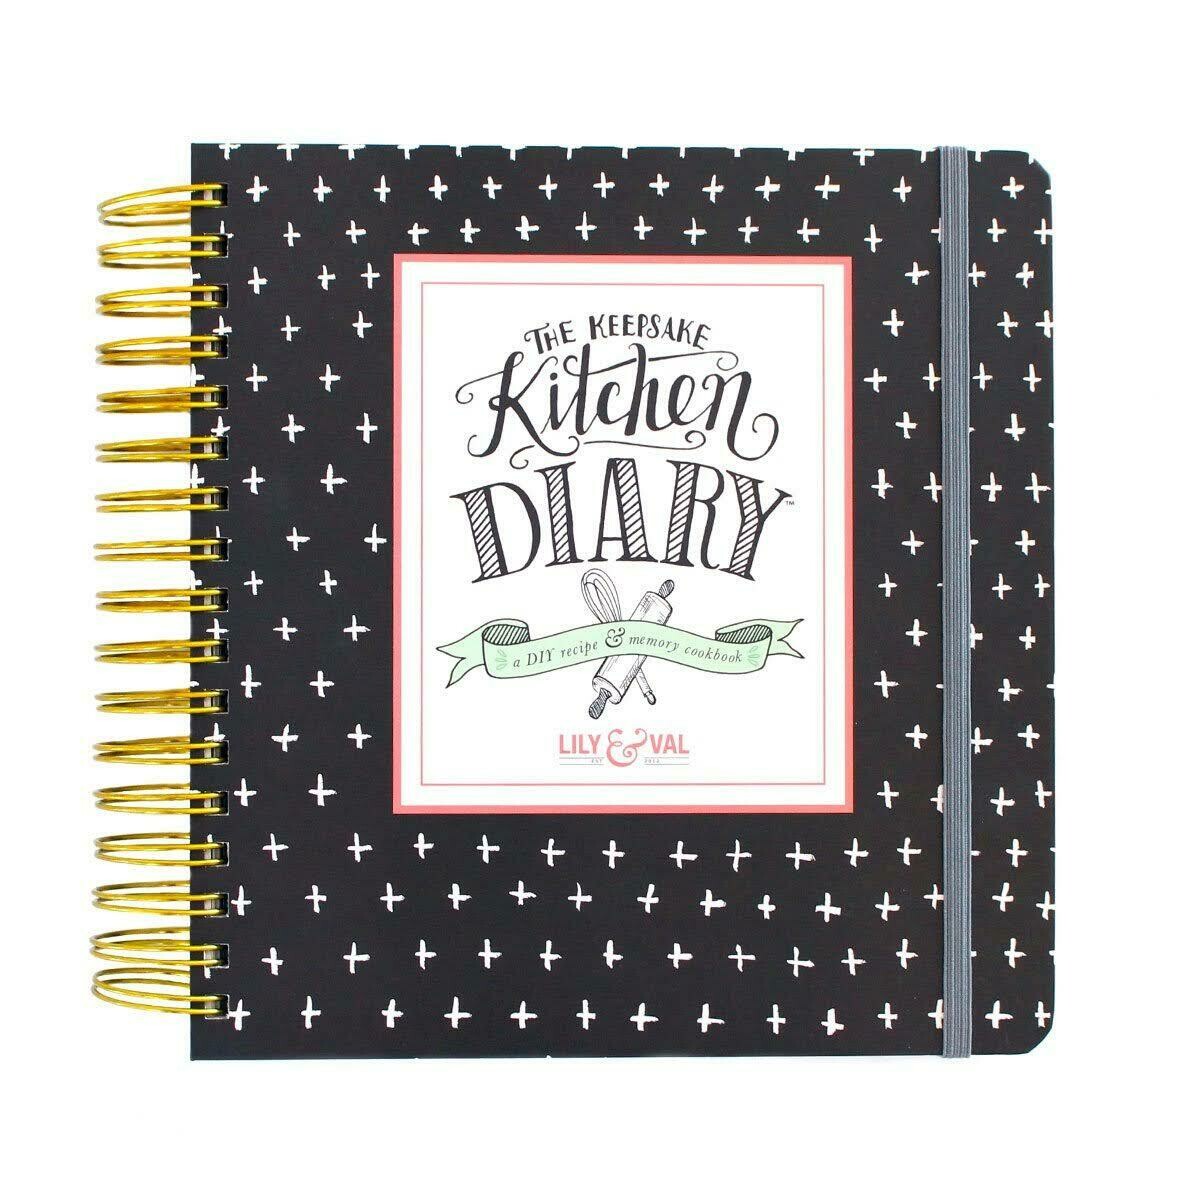 Keepsake Kitchen Recipe Diary